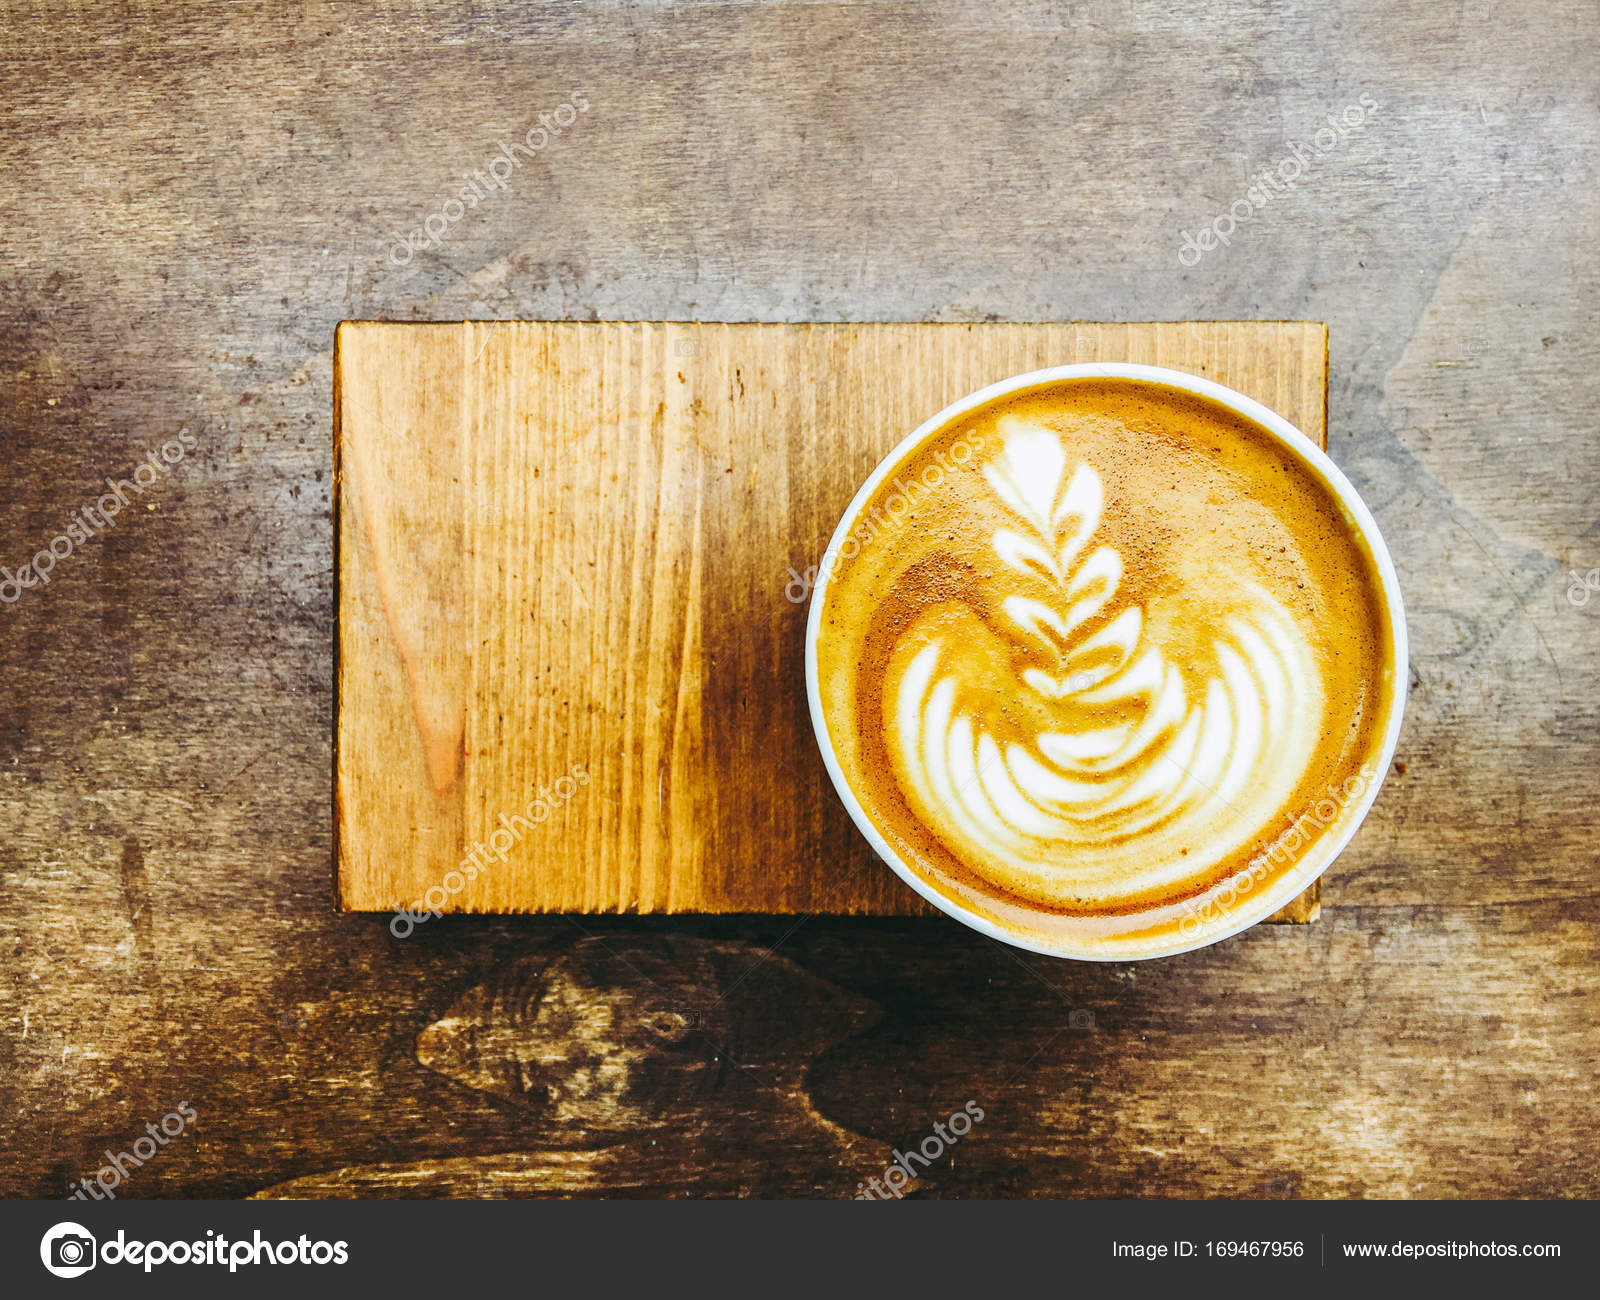 https://st3.depositphotos.com/4676639/16946/i/1600/depositphotos_169467956-stock-photo-cappuccino-cup-on-the-wooden.jpg